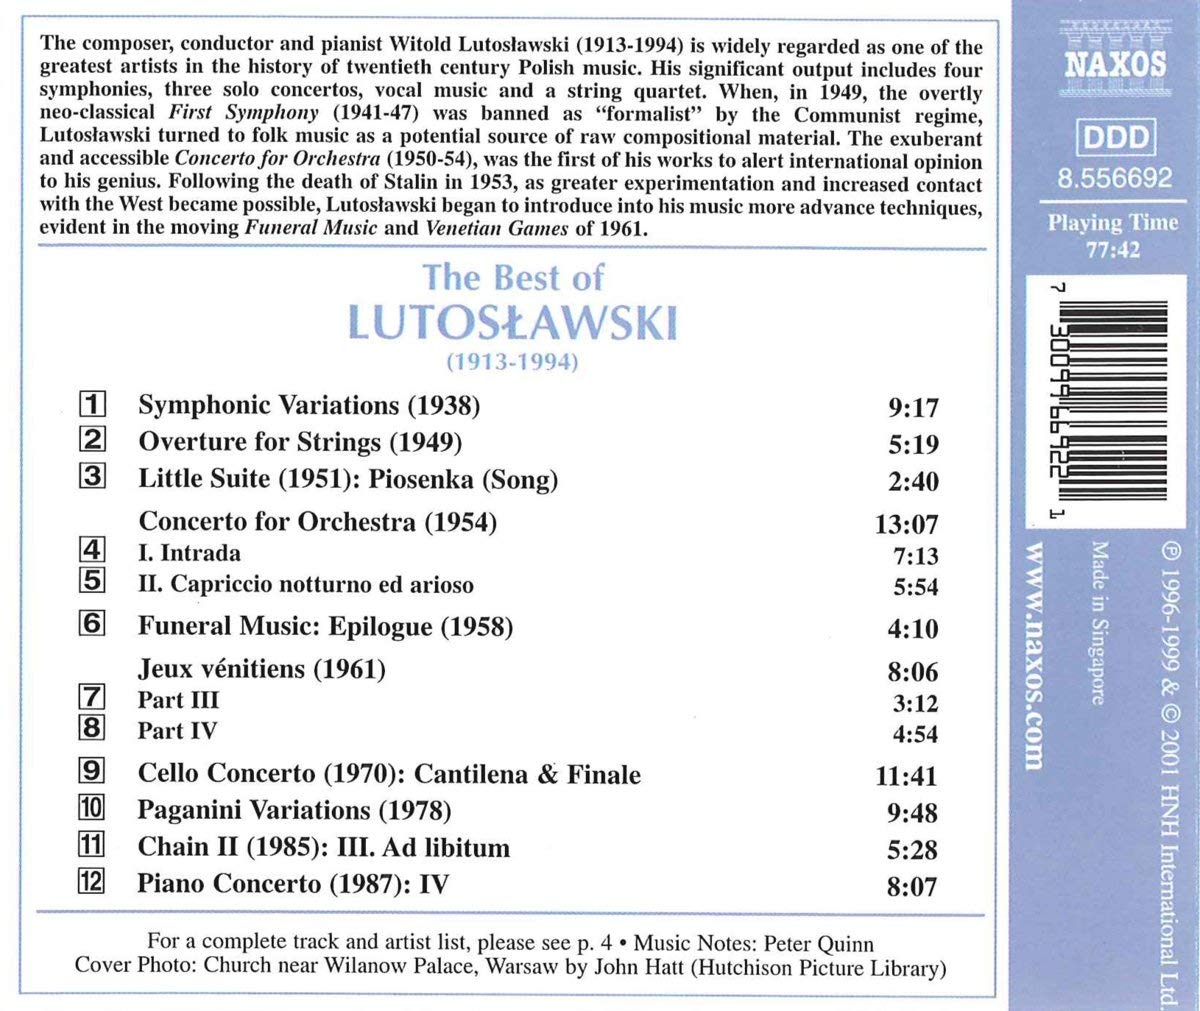 The Best of Lutosławski - slide-1